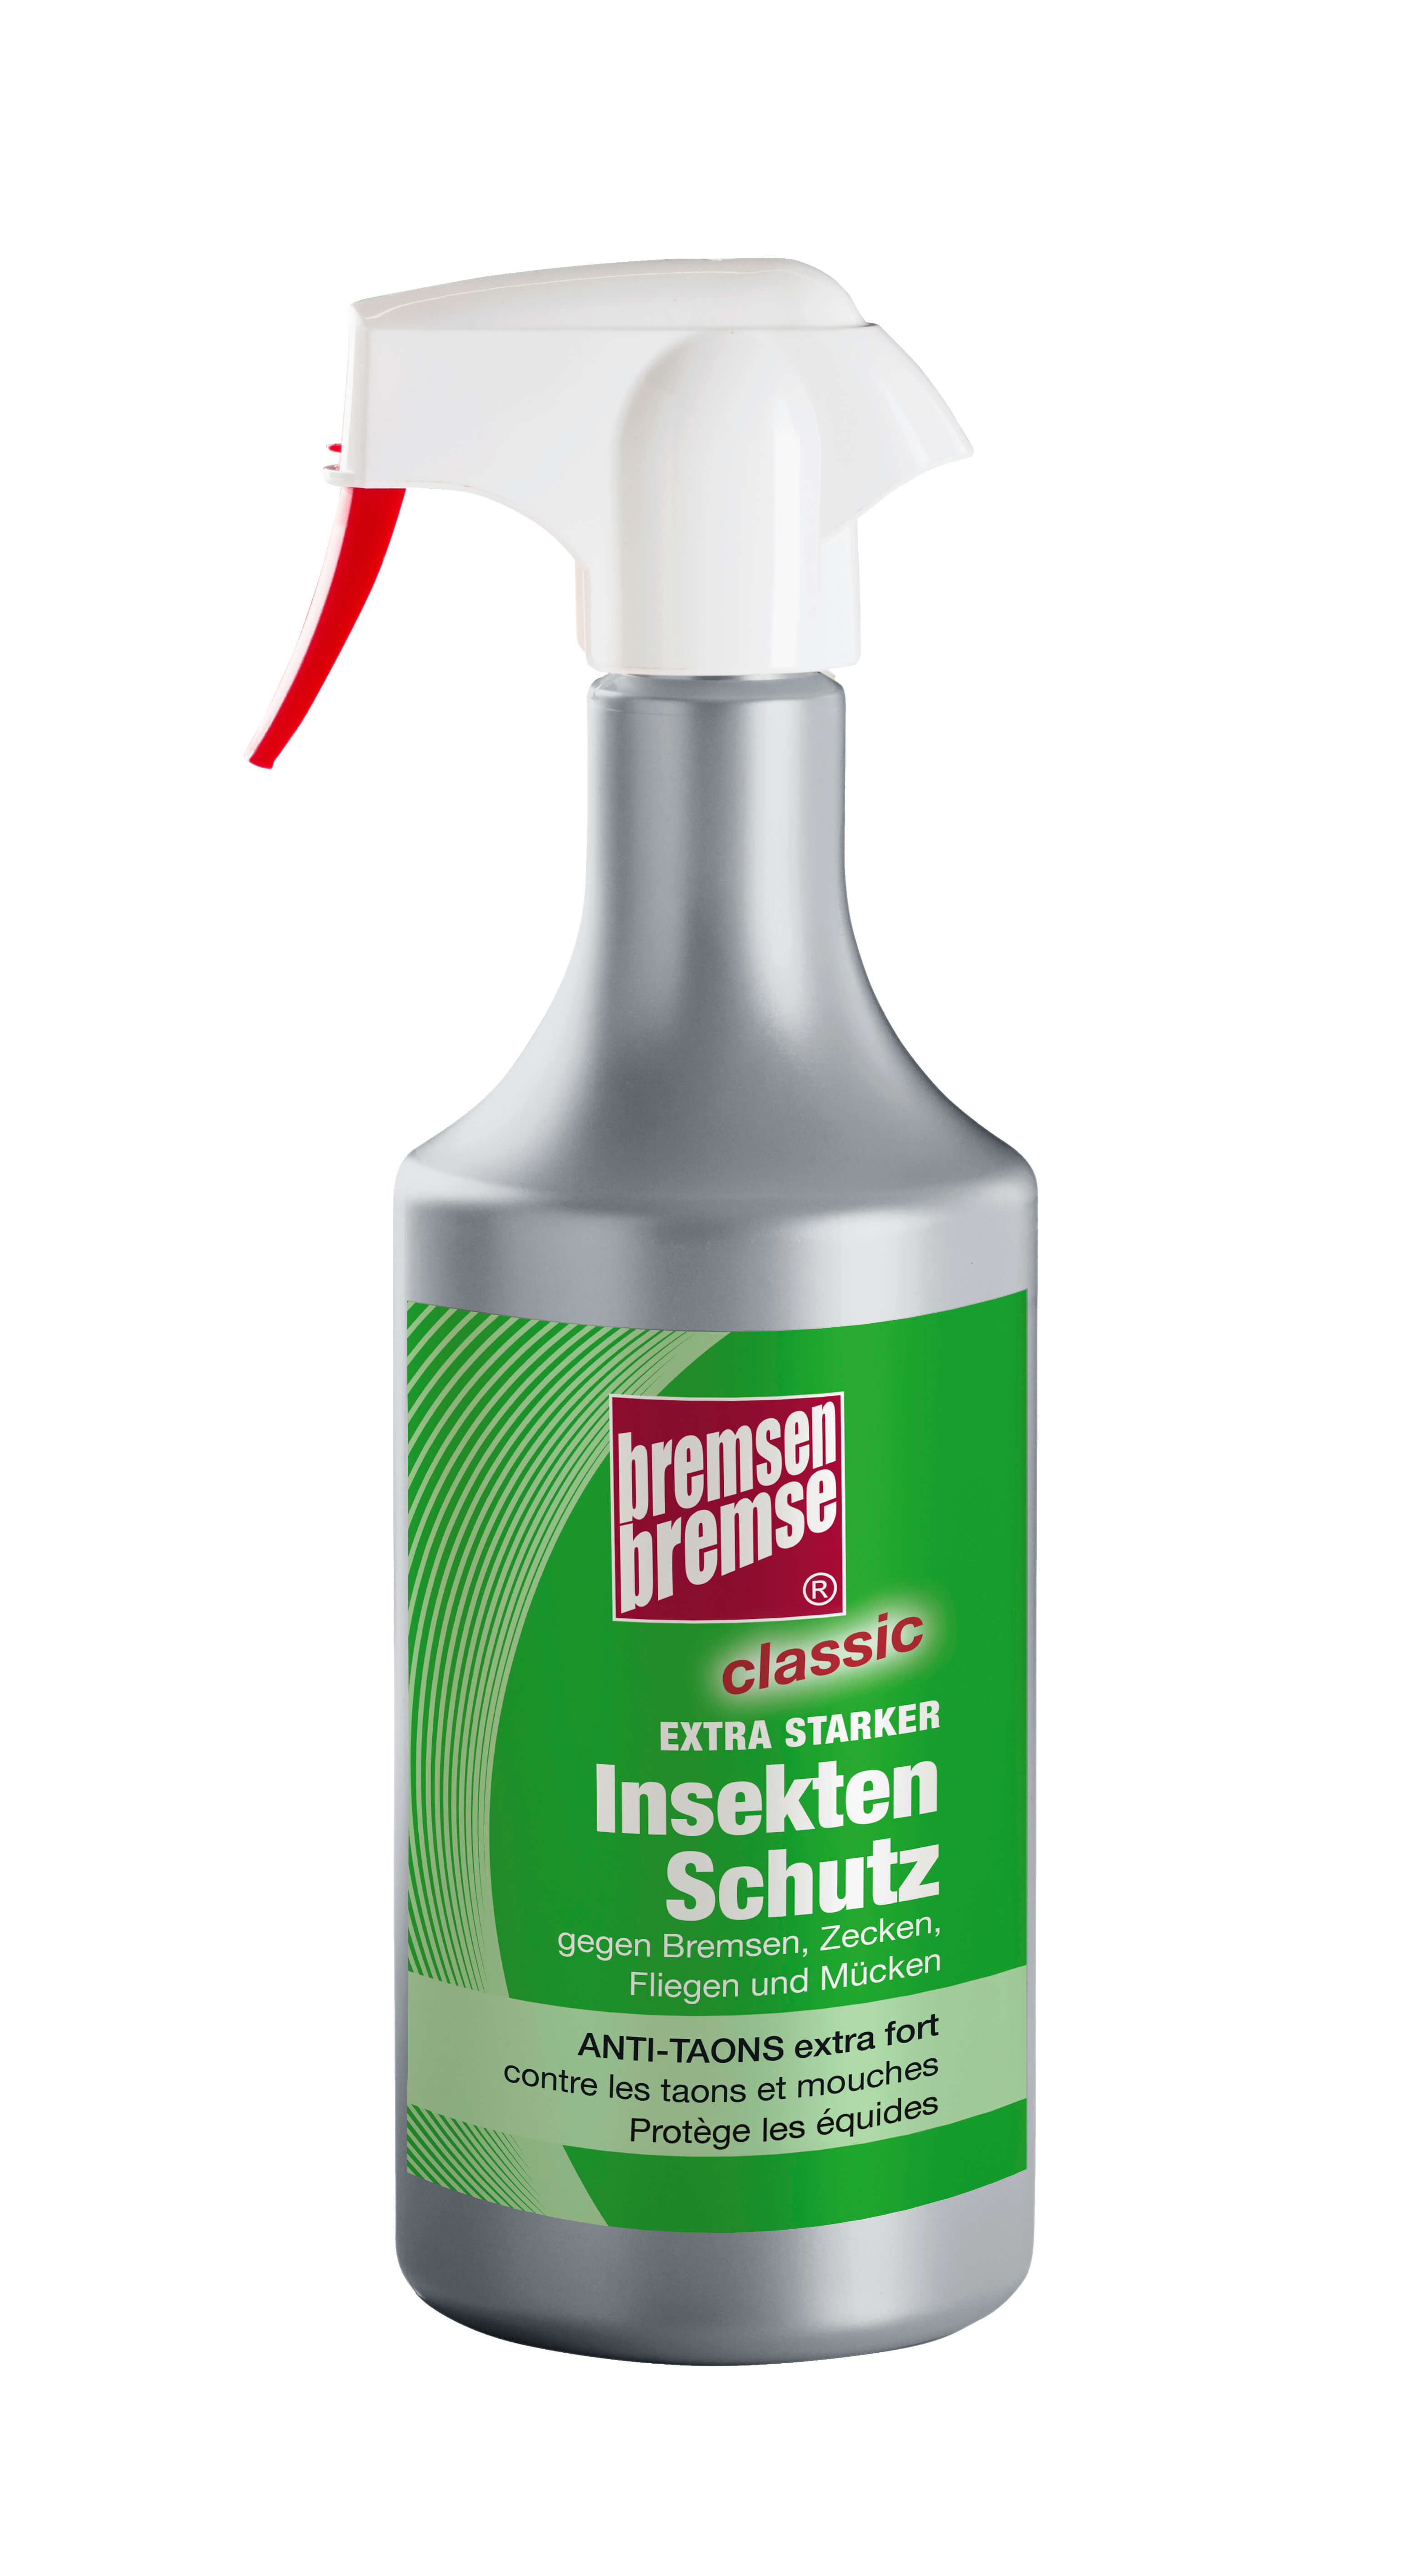 Bremsenbremse® classic Insektenschutz 0,75 l